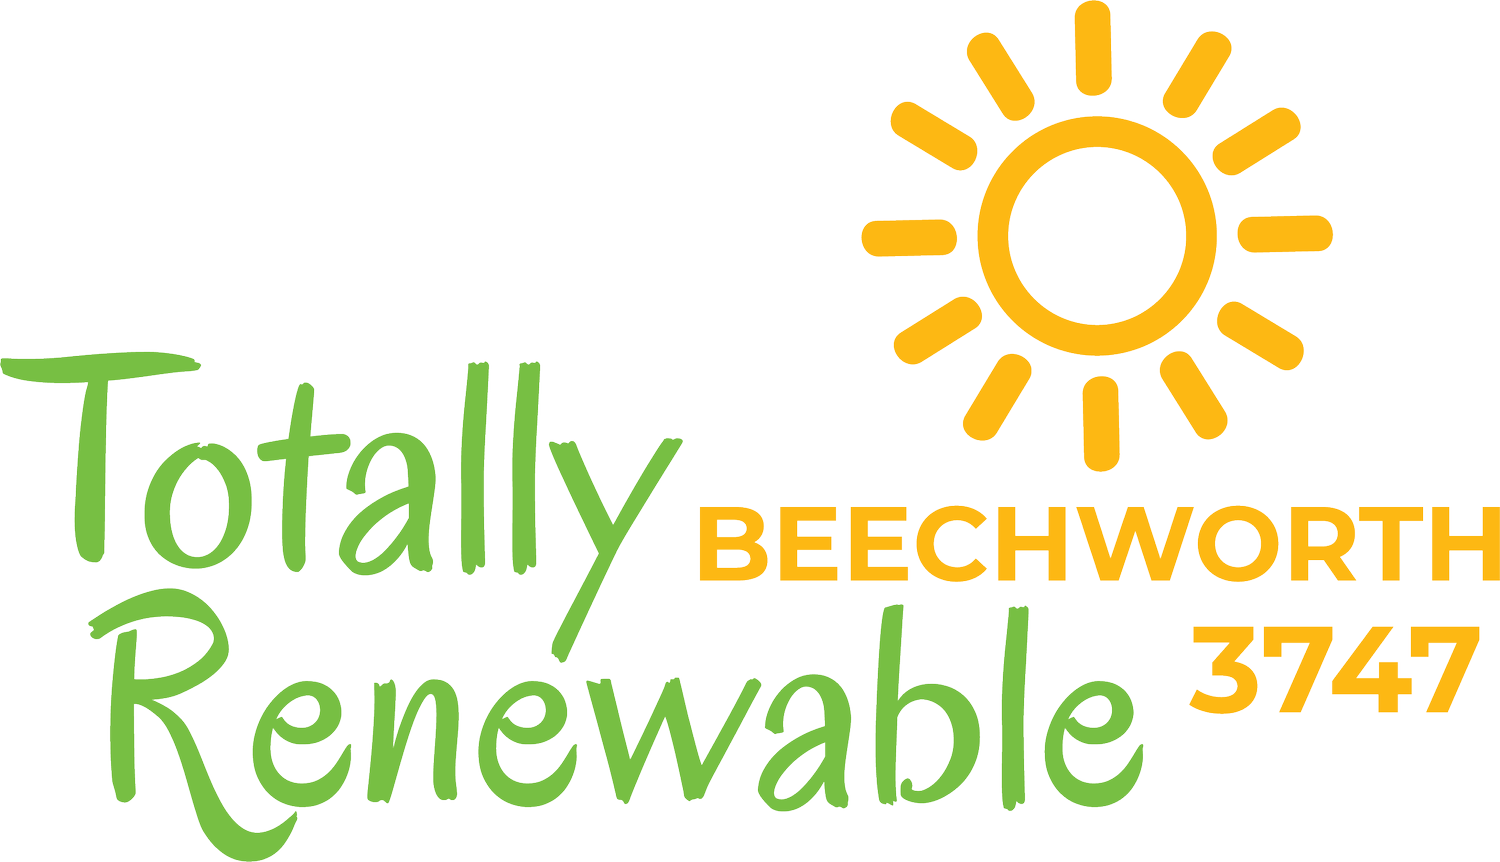 Totally Renewable Beechworth